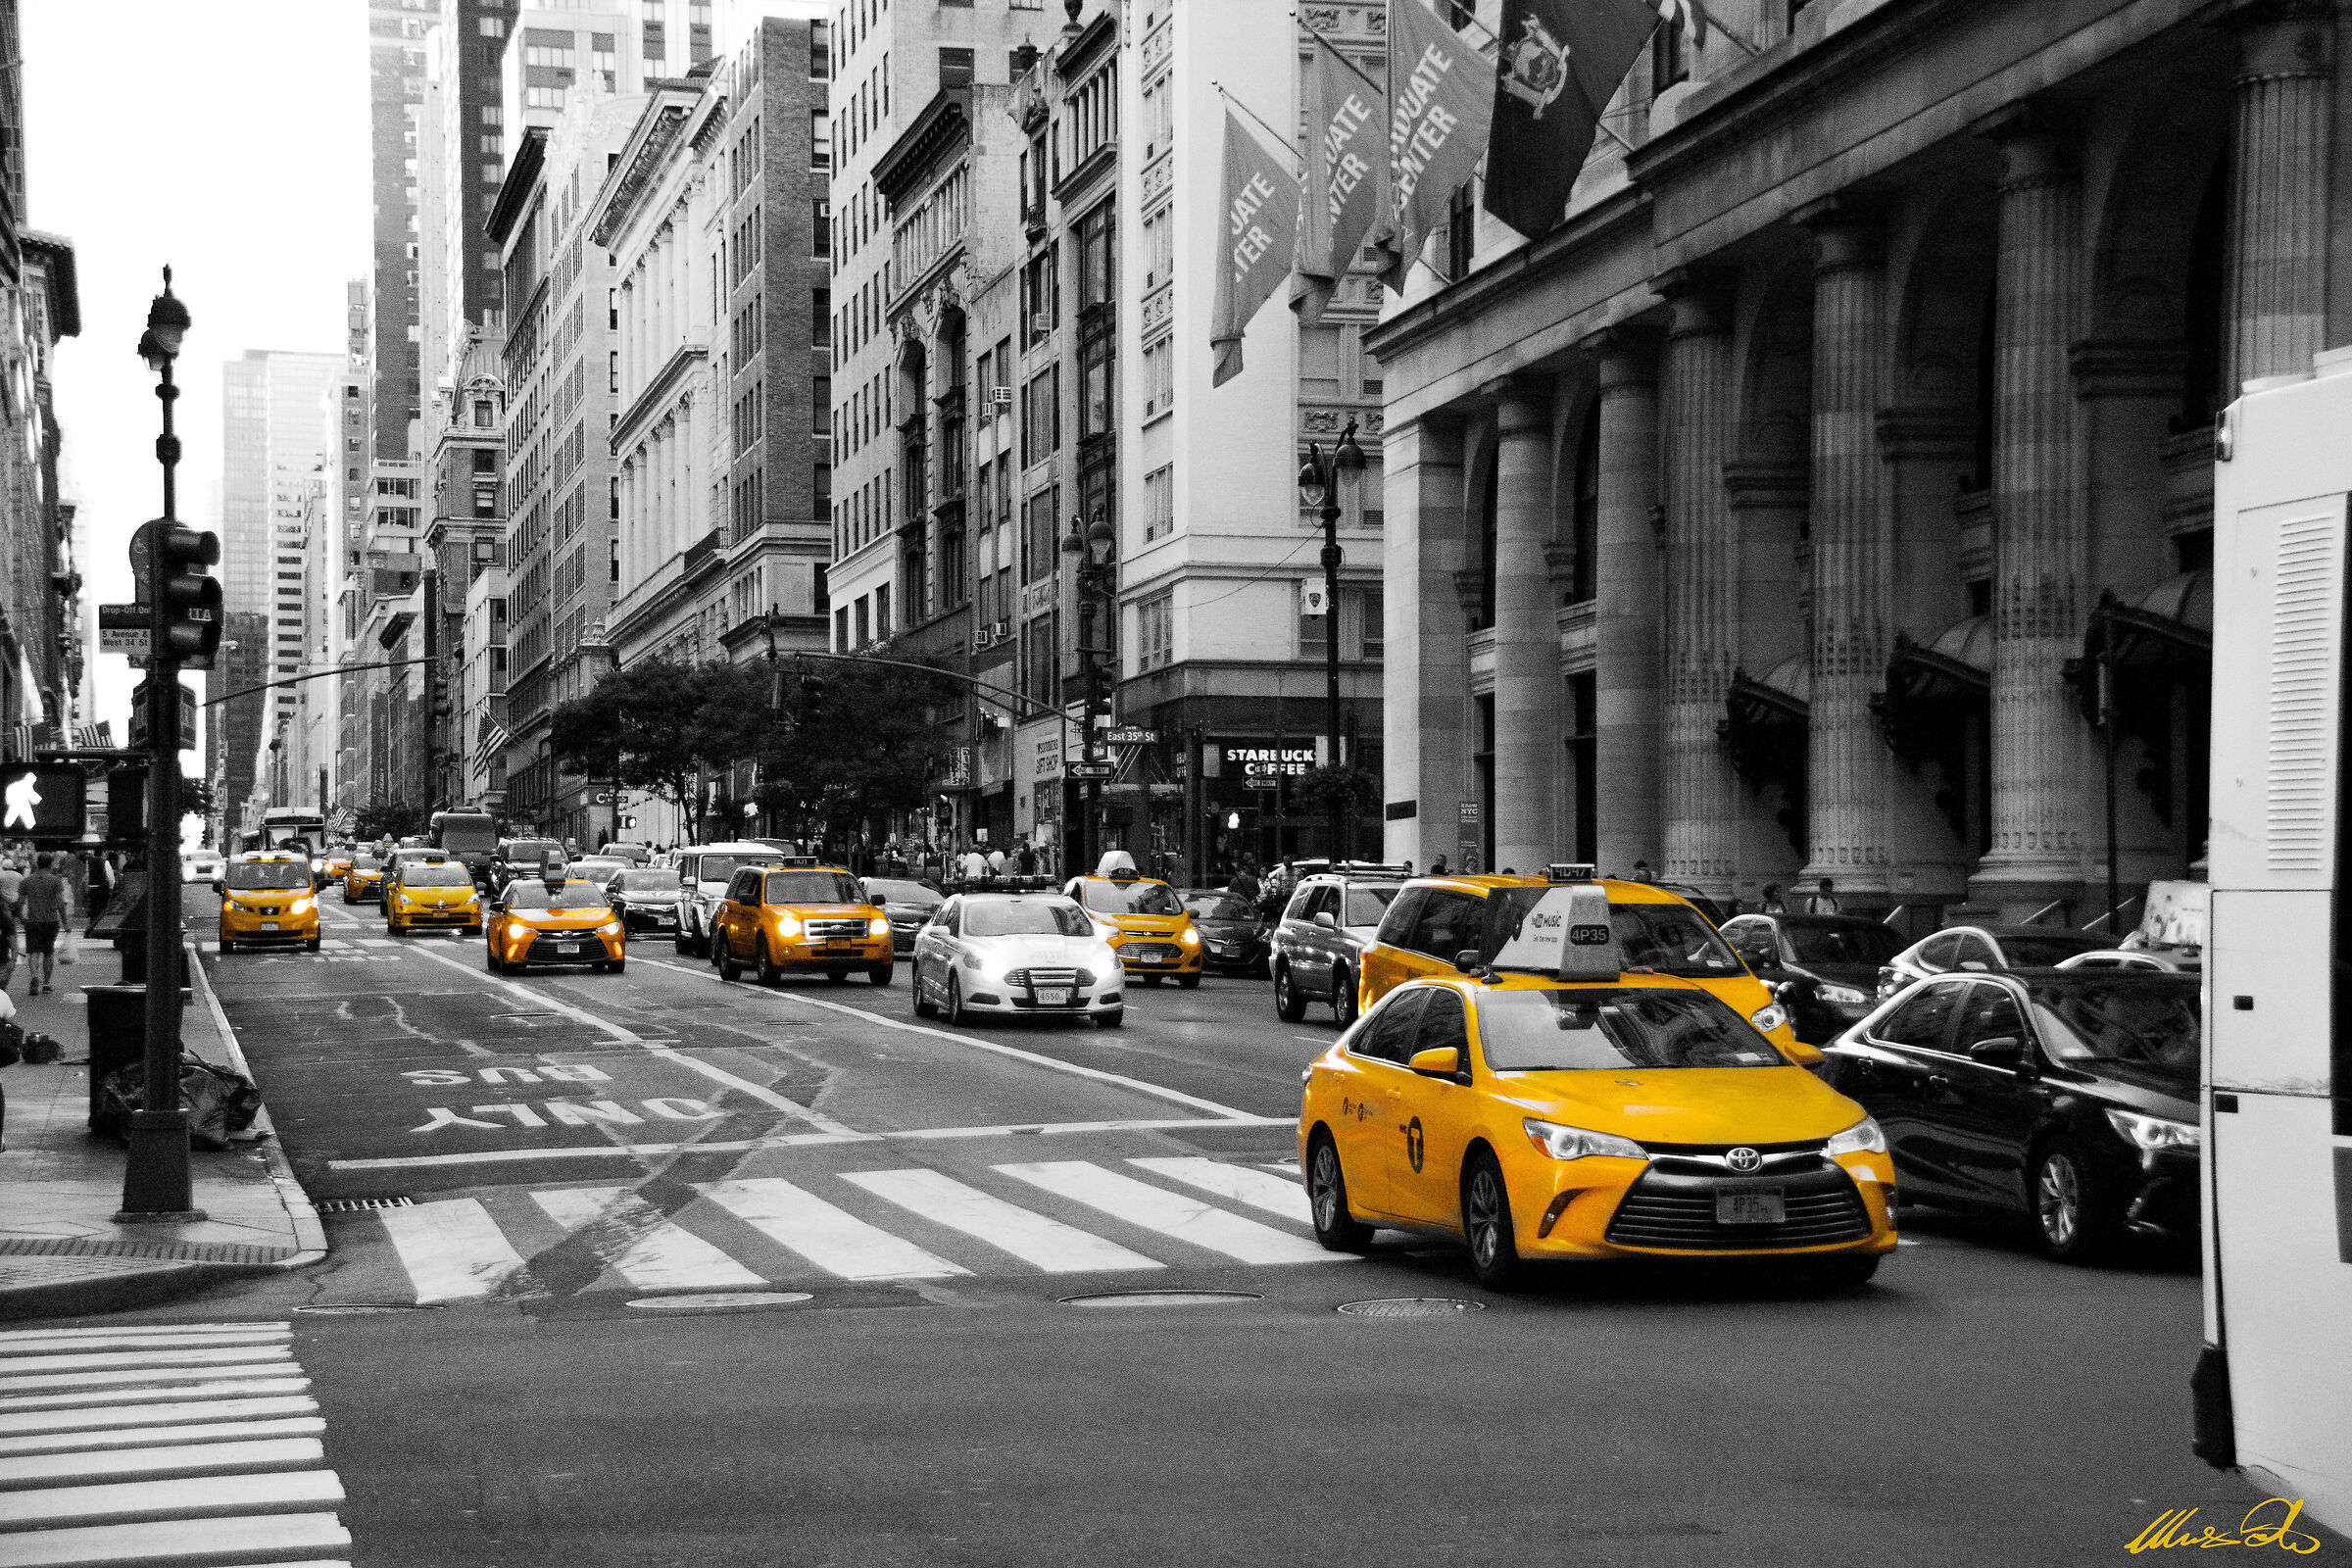 il famoso taxi giallo...